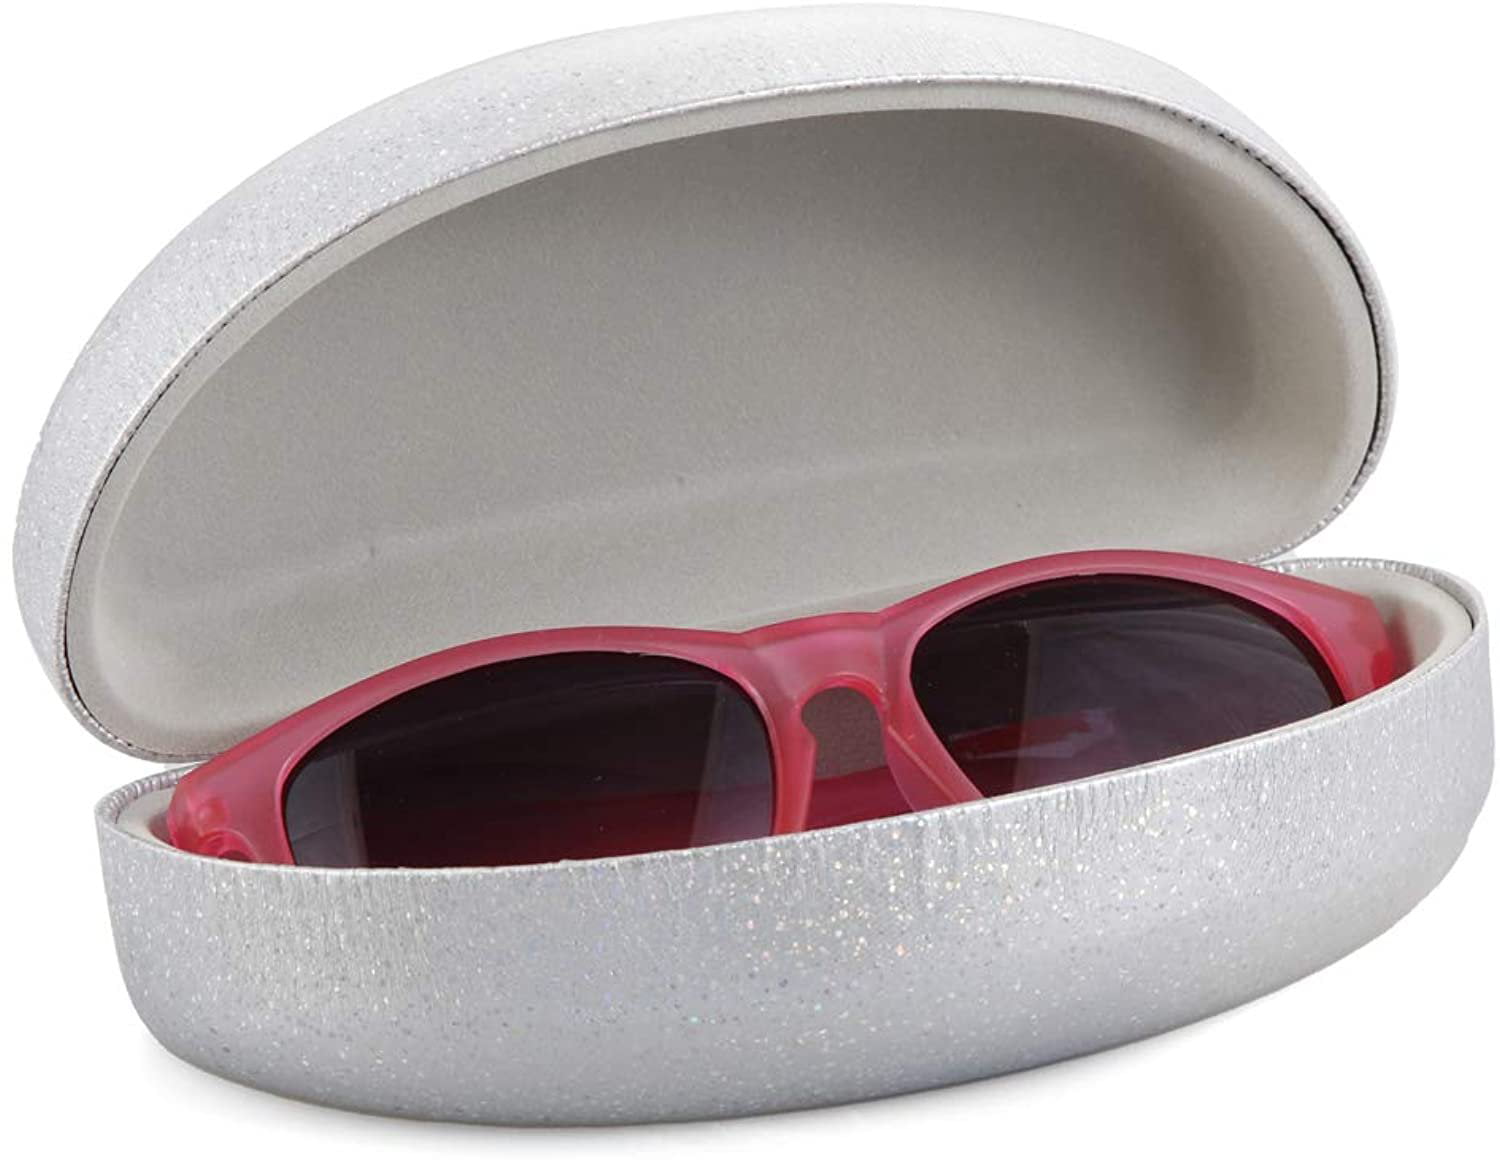 Glasses Case in Pink, Eyewear